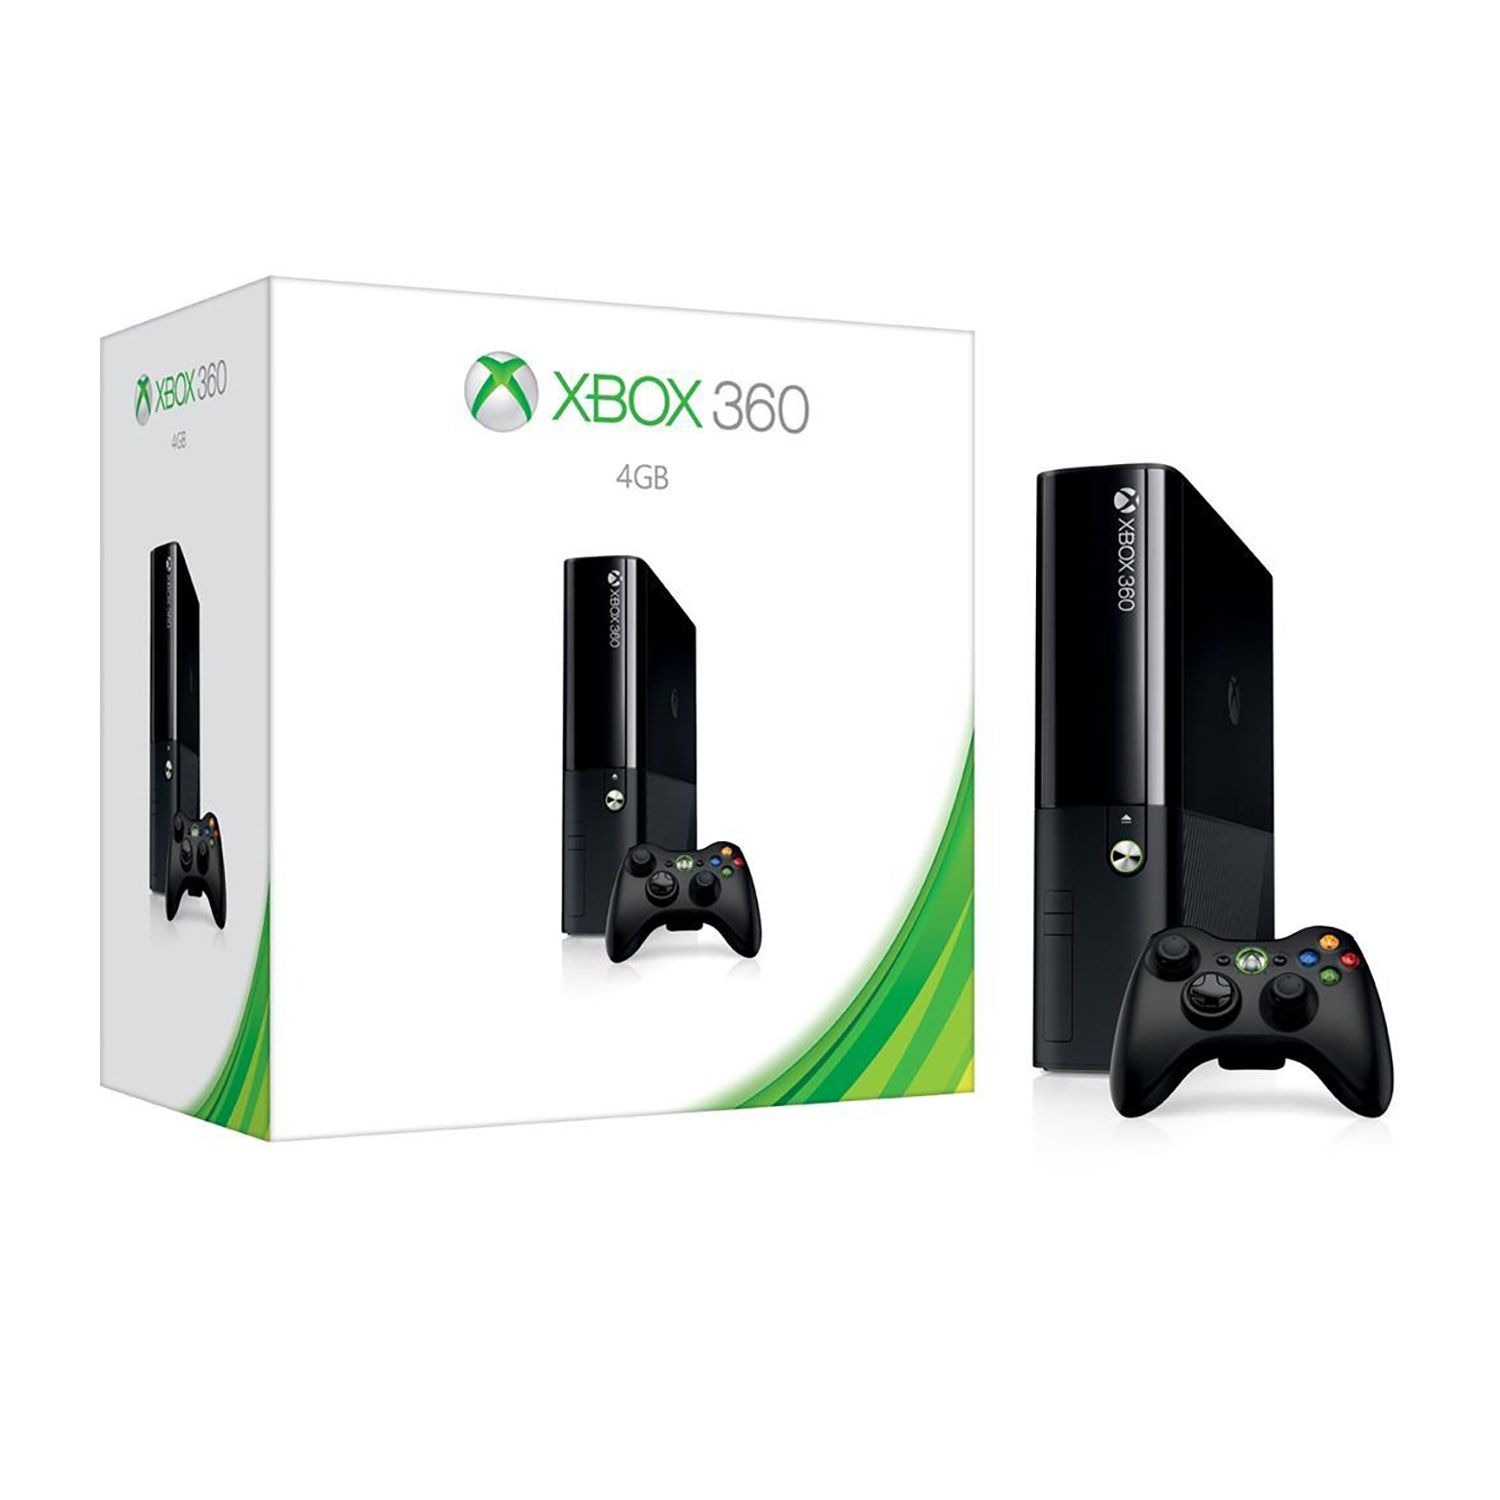 UOL Jogos testa o primeiro Xbox 360 do Brasil 